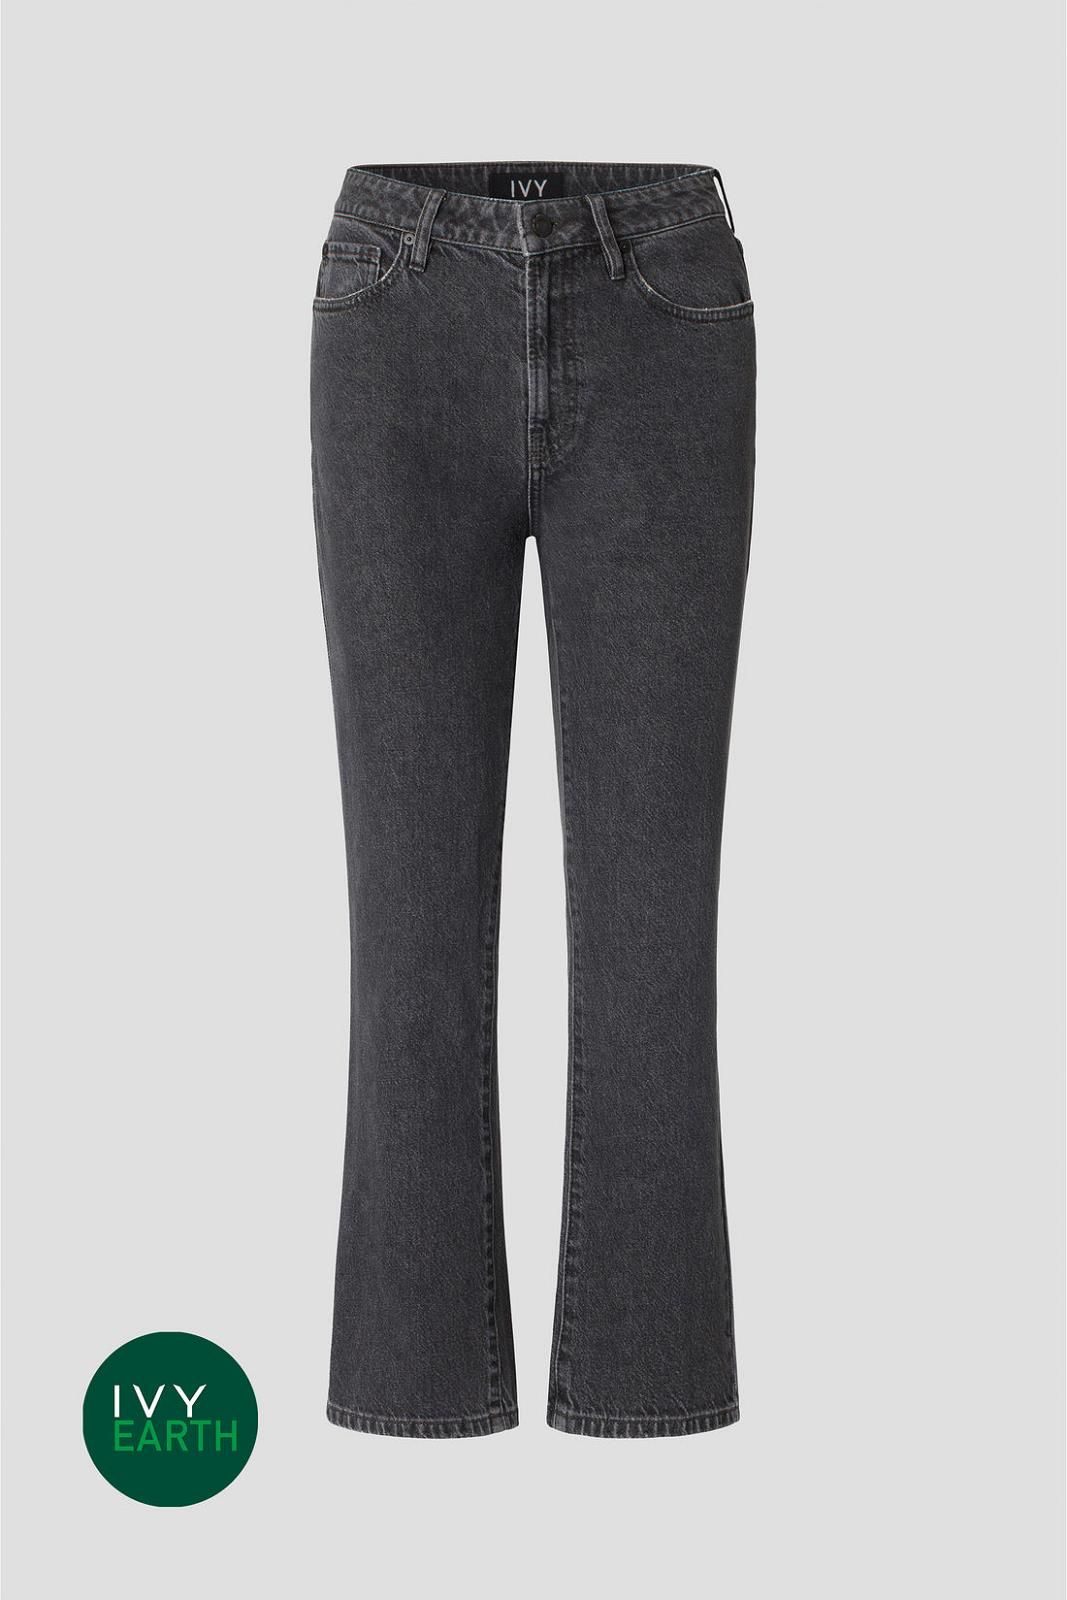 IVY jeans grey  (Frida - ) - Hype Fashion (Schoten)